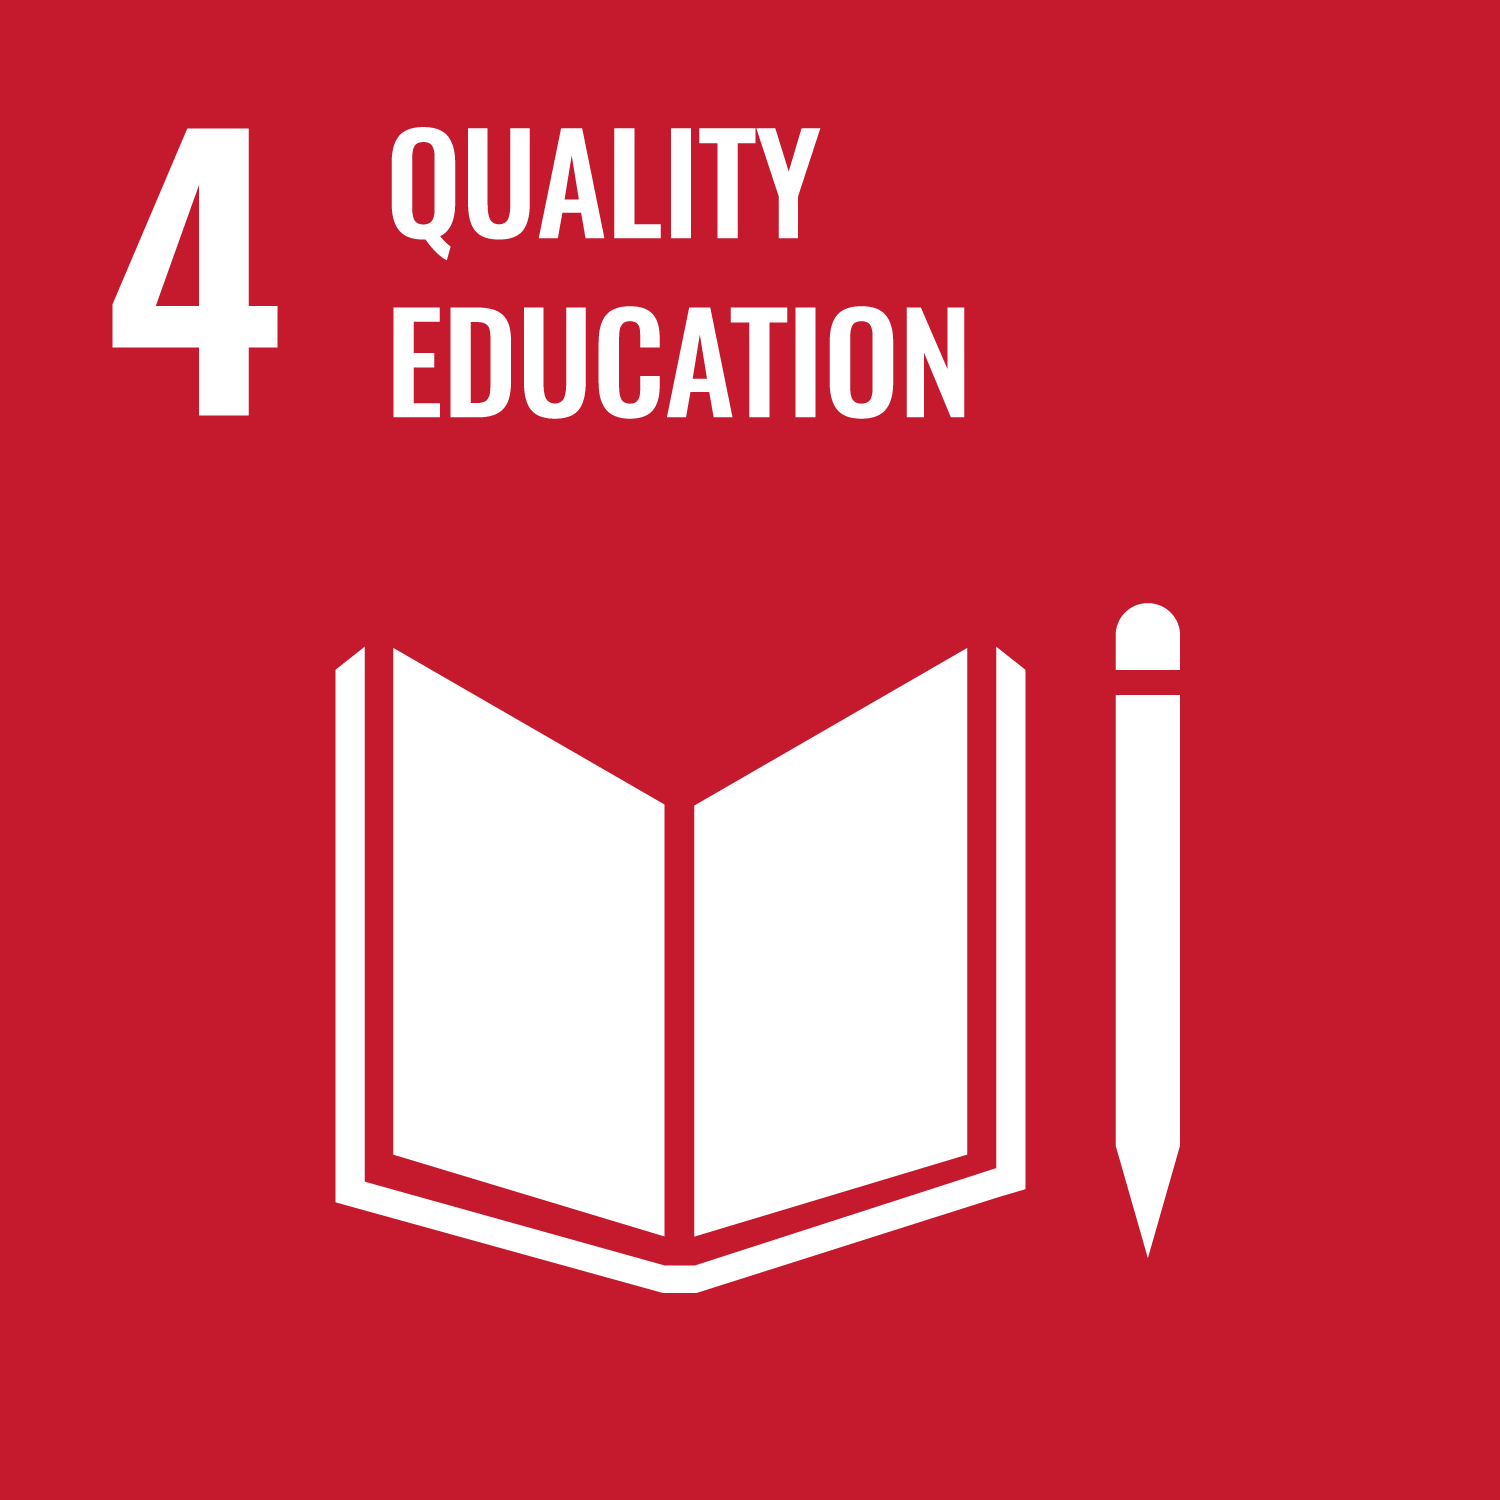 UN Sustainable Development Goal 4 - Quality Education